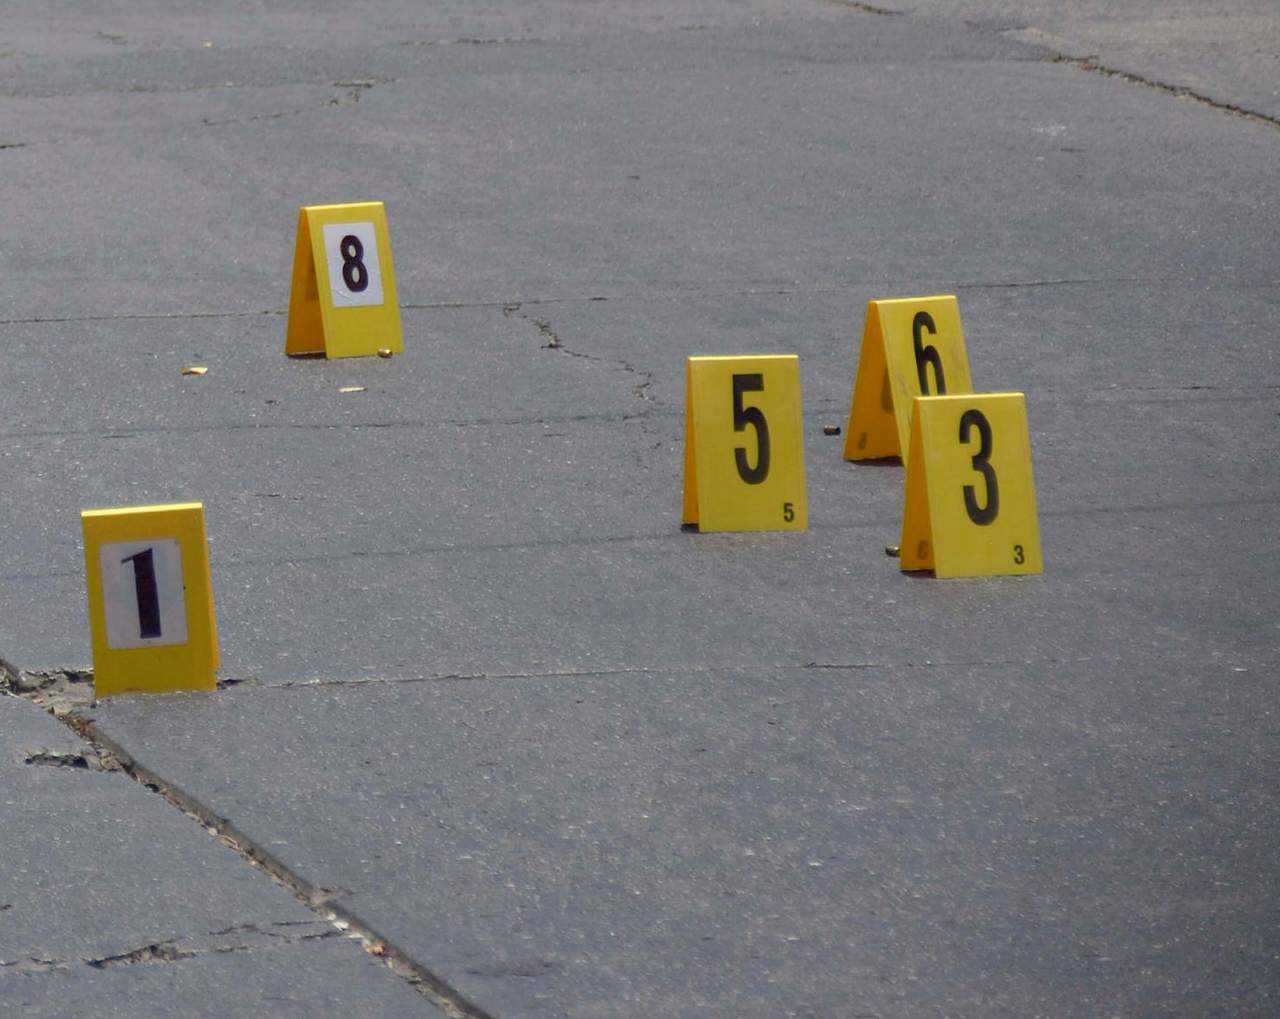 Asesinan a 21 personas en Guanajuato en menos de 30 horas